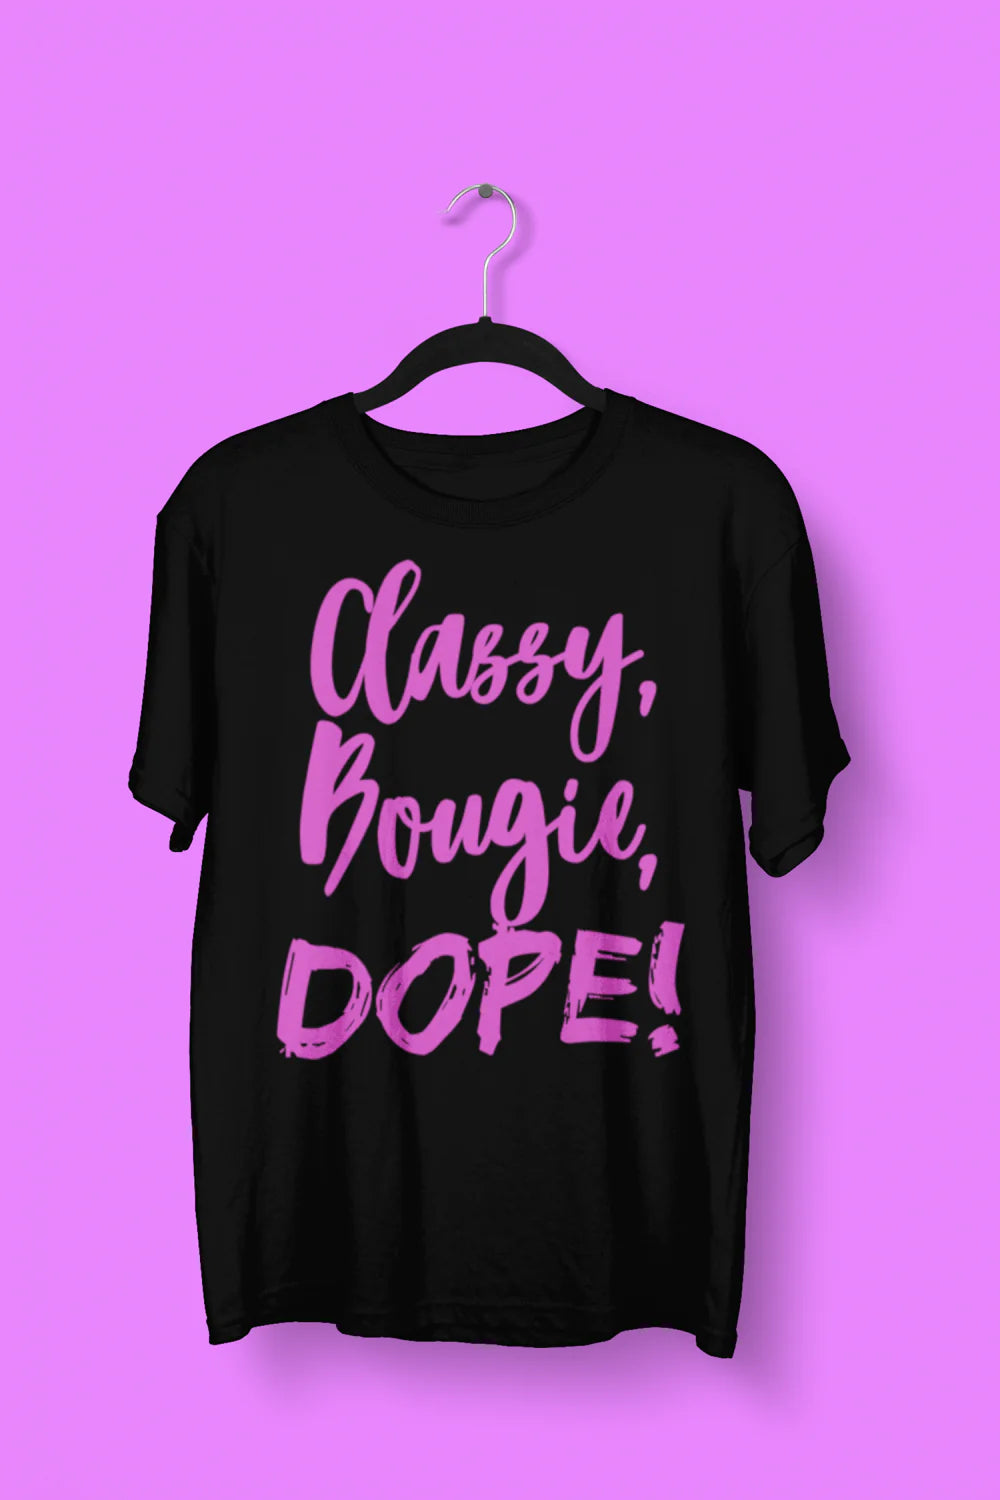 Classy, Bougie, Dope T-Shirt